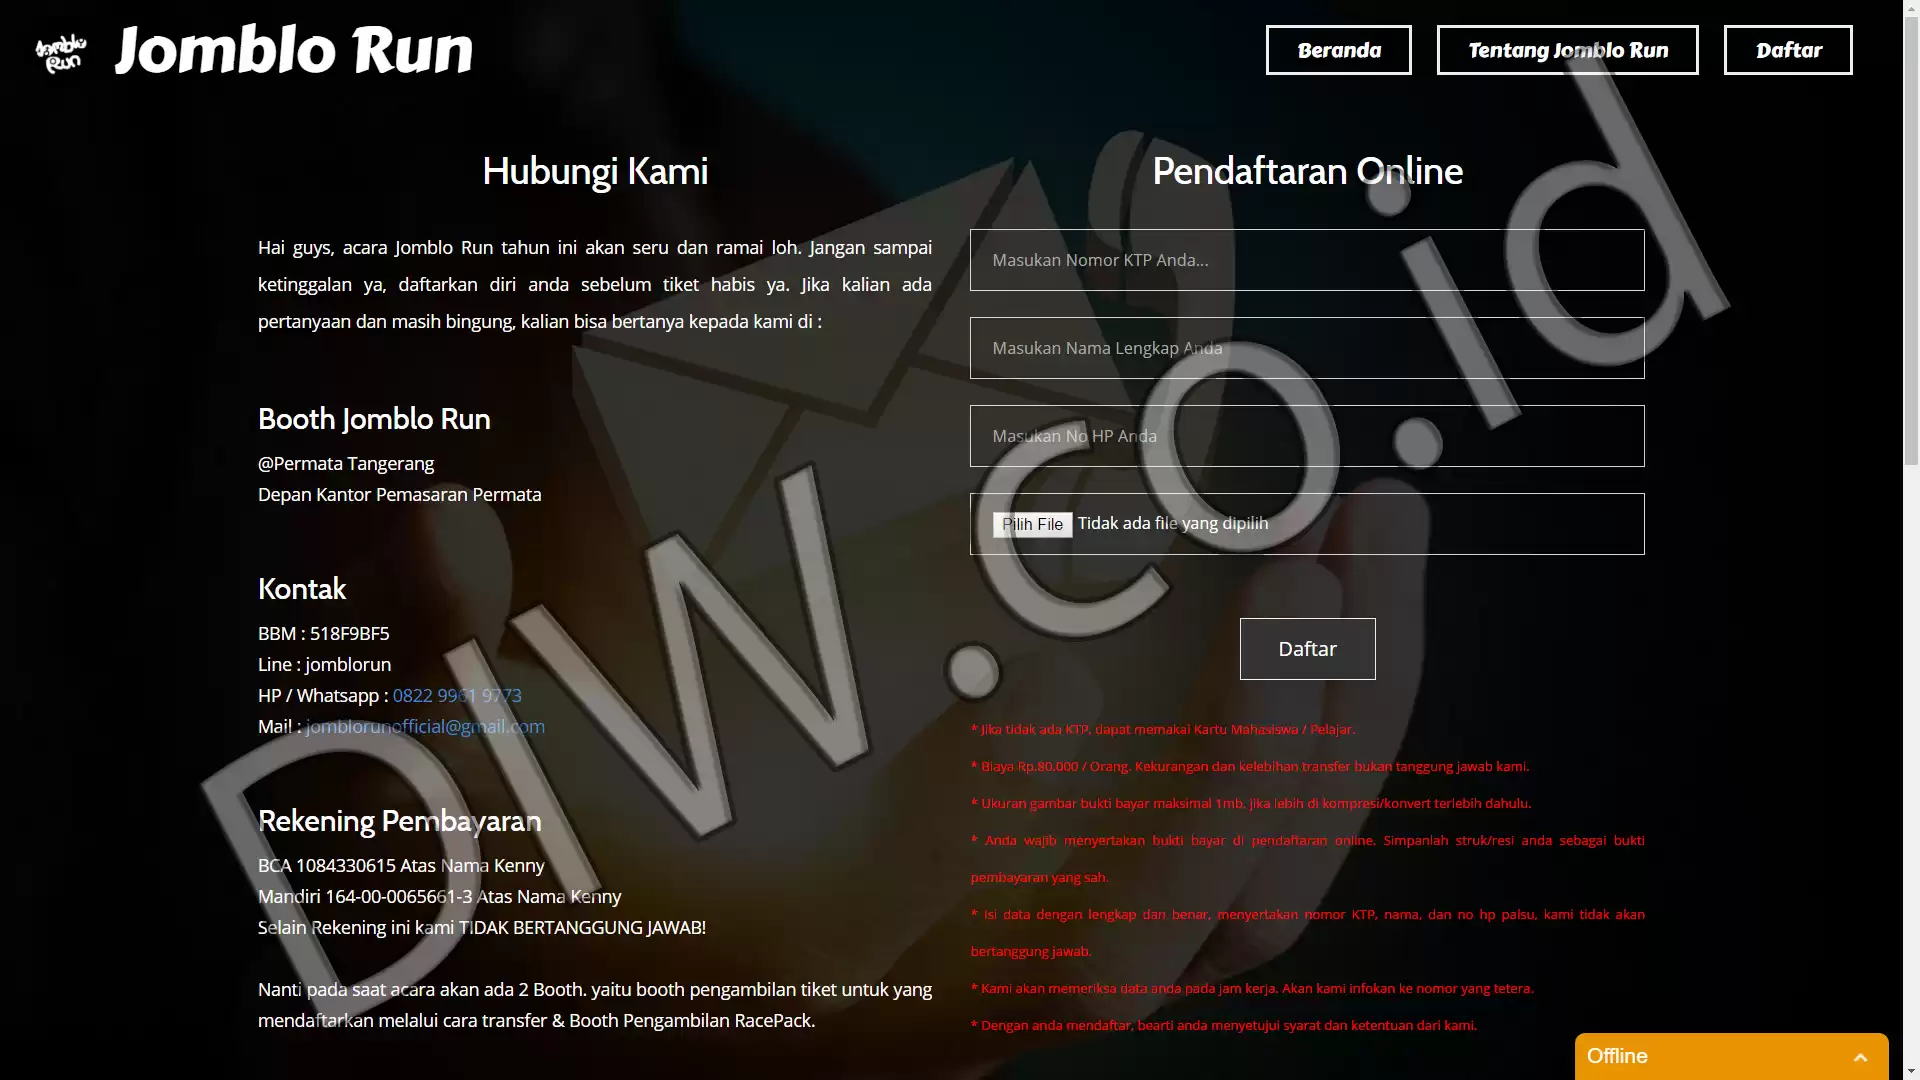 Portfolio - Jomblo Run - DIW.co.id (Digital In Website) Jasa Pembuatan Website dan Program Skripsi